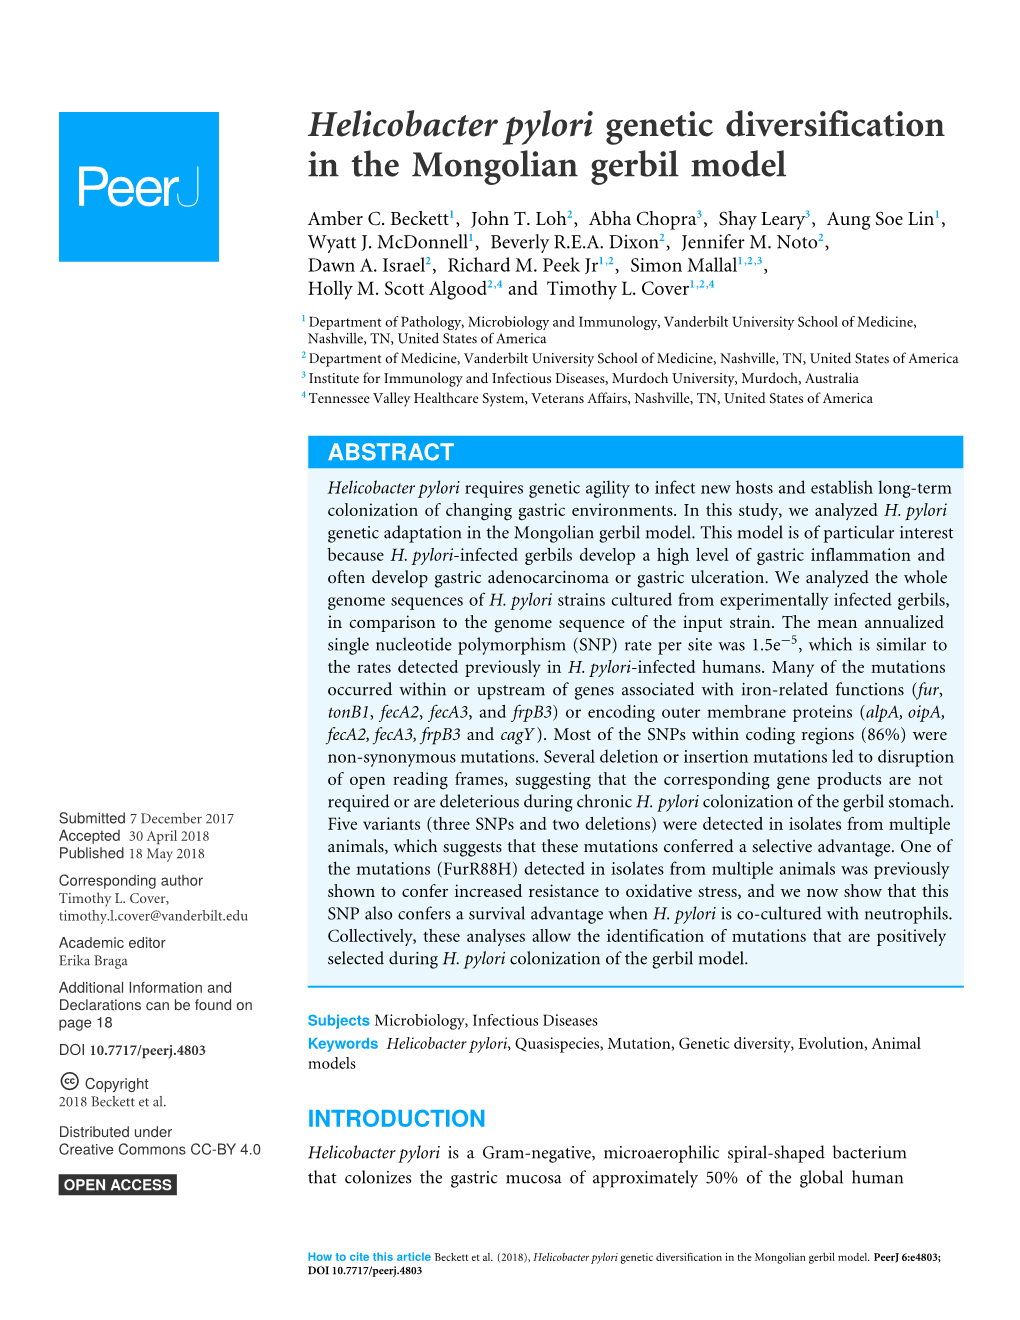 Helicobacter Pylori Genetic Diversification in the Mongolian Gerbil Model